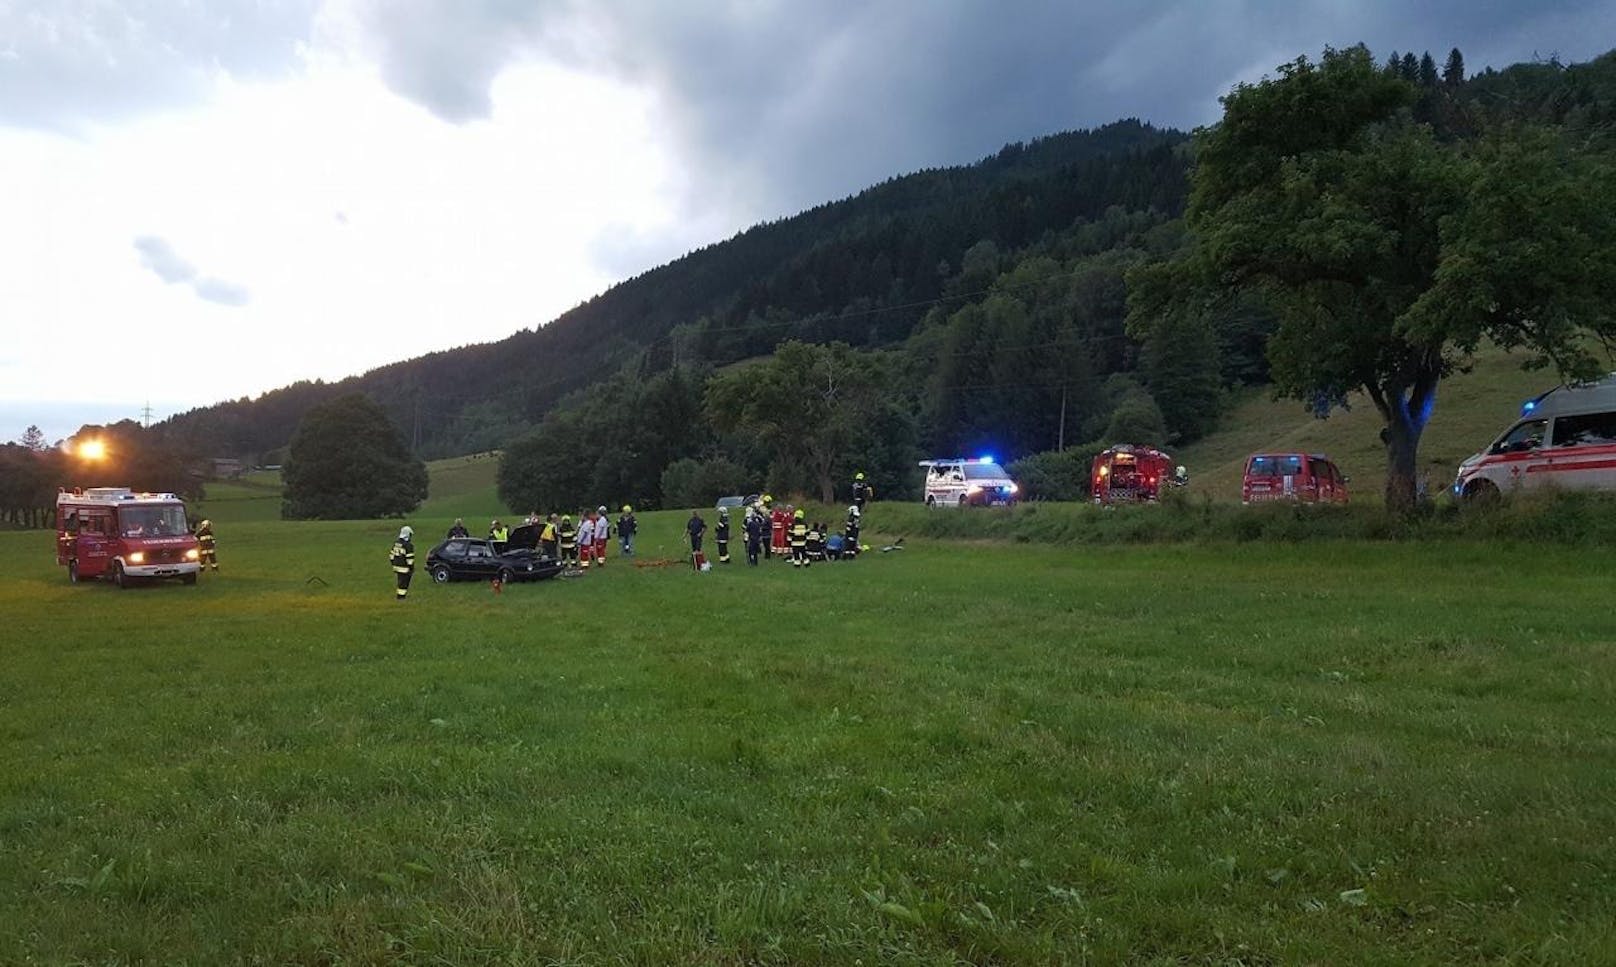 Ein schwerer Verkehrsunfall erschüttert den Bezirk Liezen: Ein 16-Jähriger schwebt nach dem Crash in Lebensgefahr.